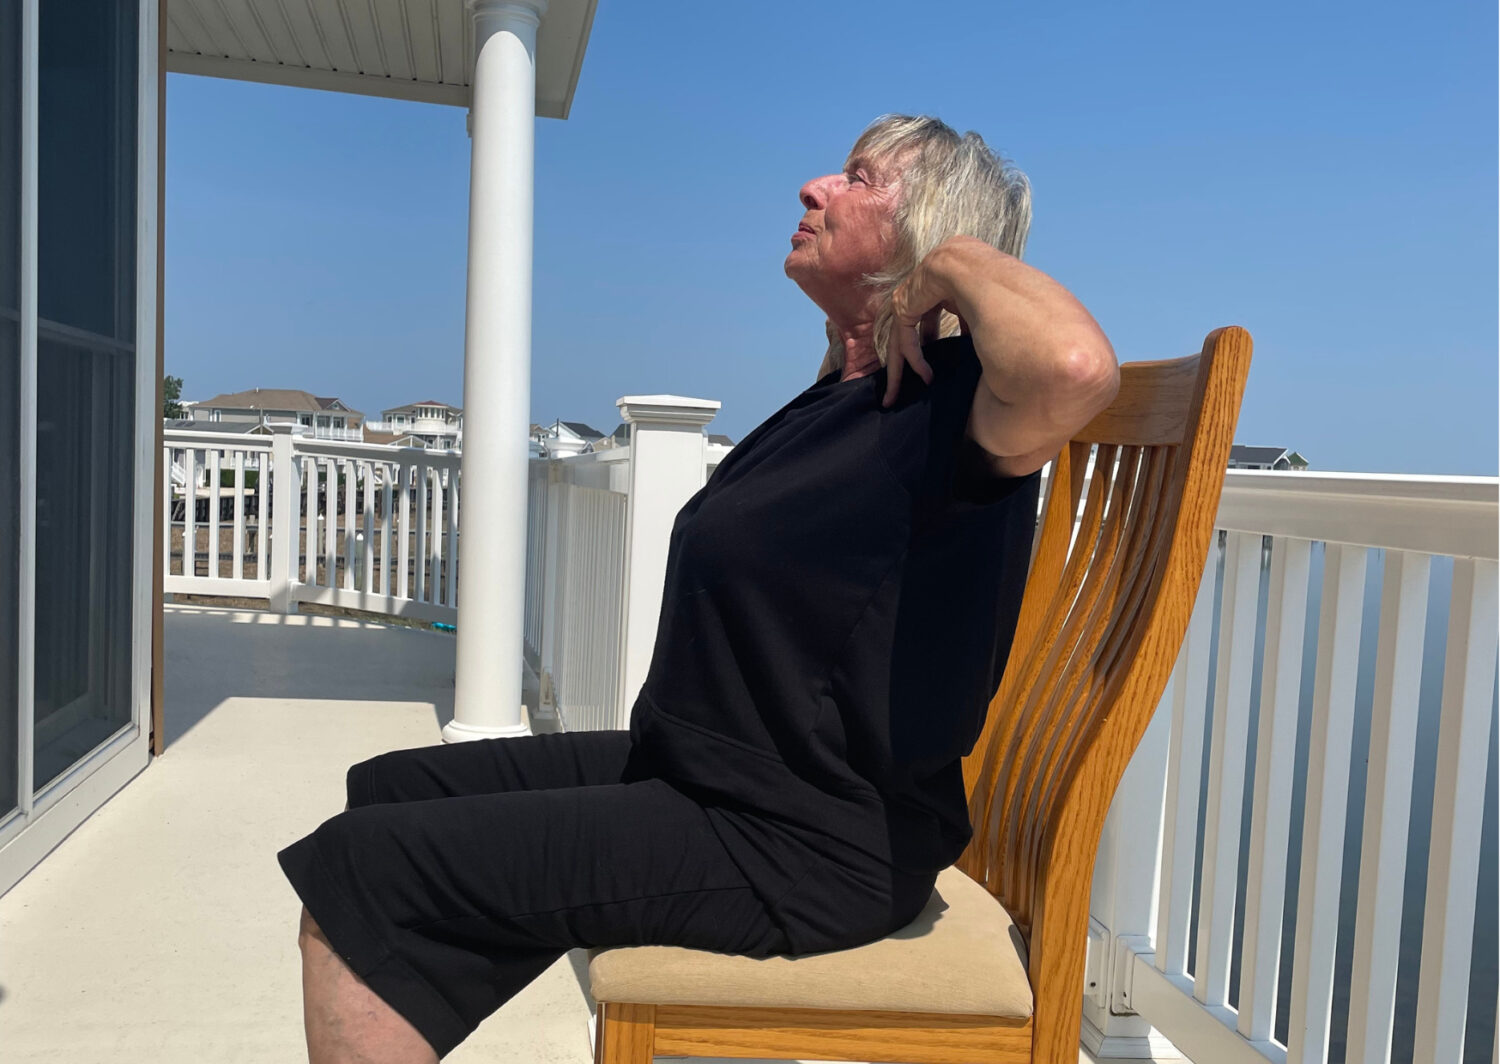 Chair yoga for seniors